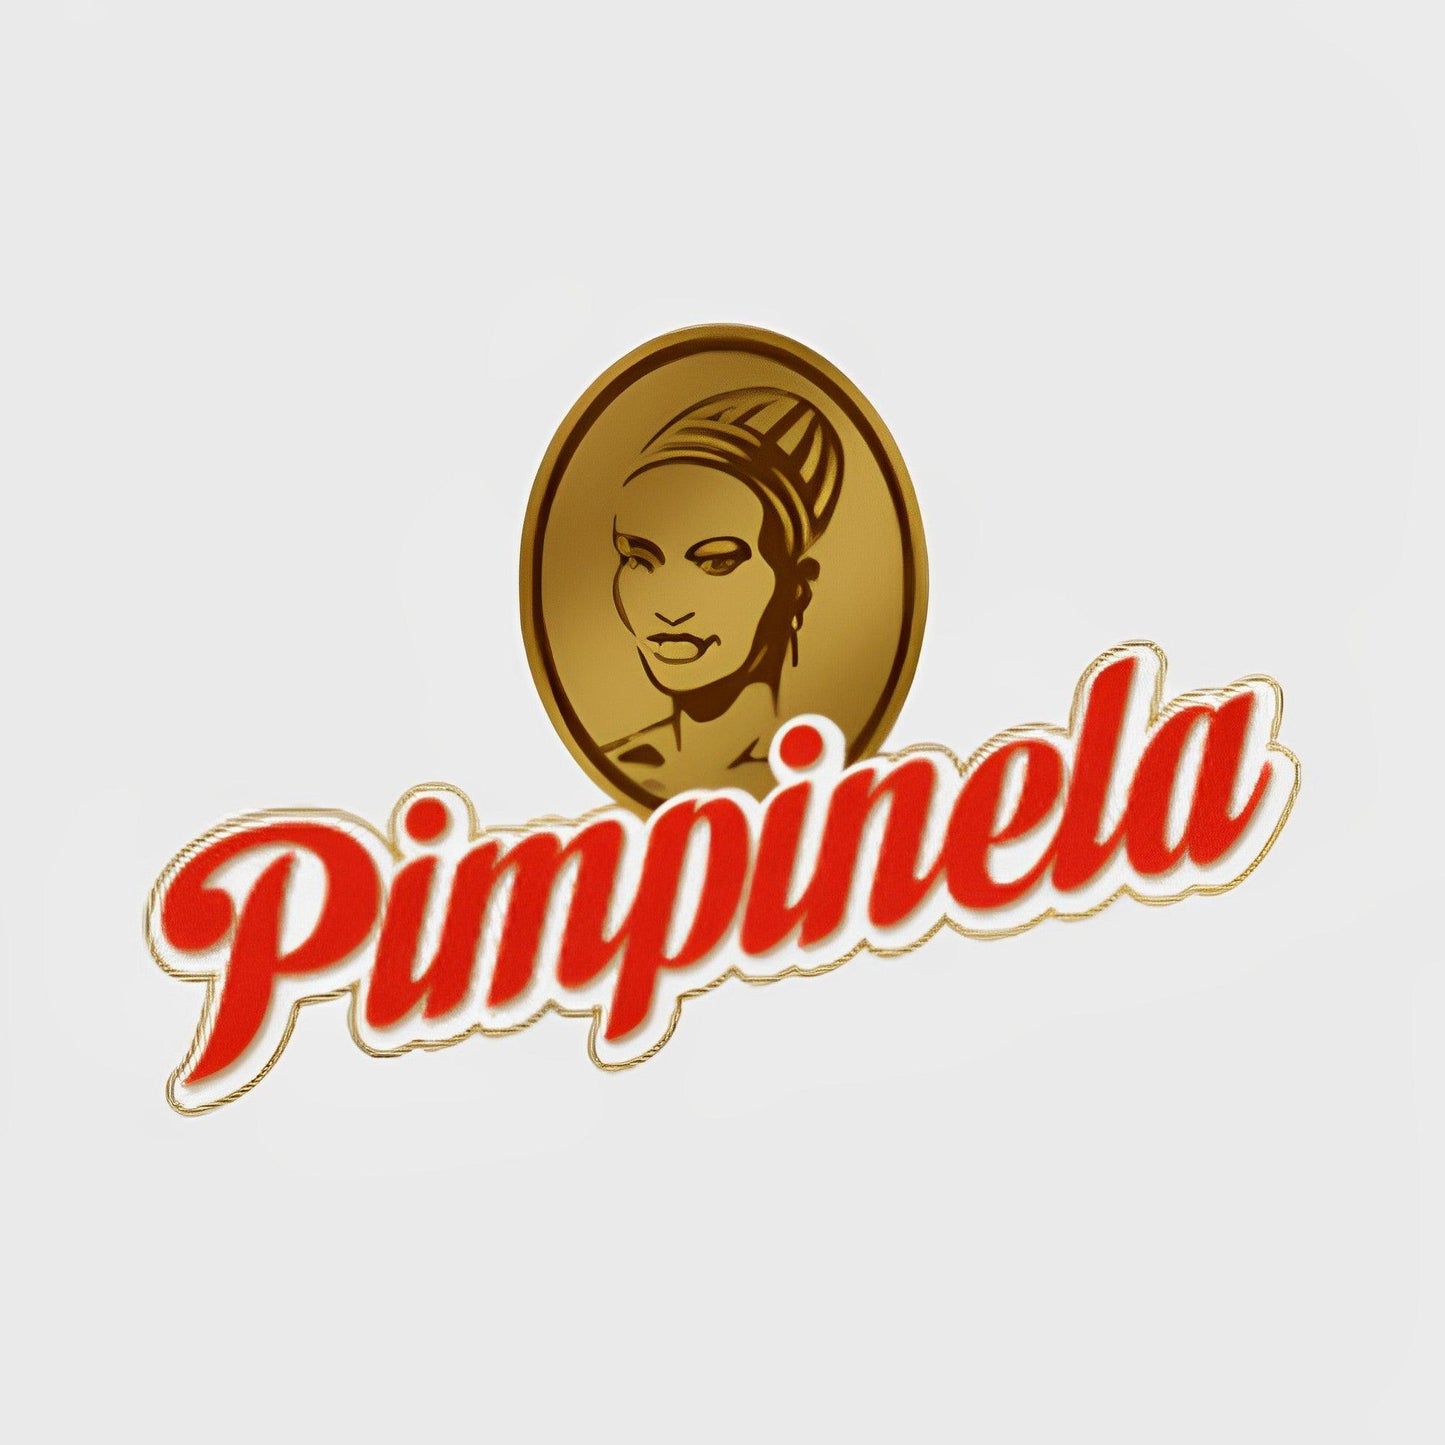 Pimpinela Traditional Coffee 17.64 oz. (Pack of 2) - Brazilian Shop